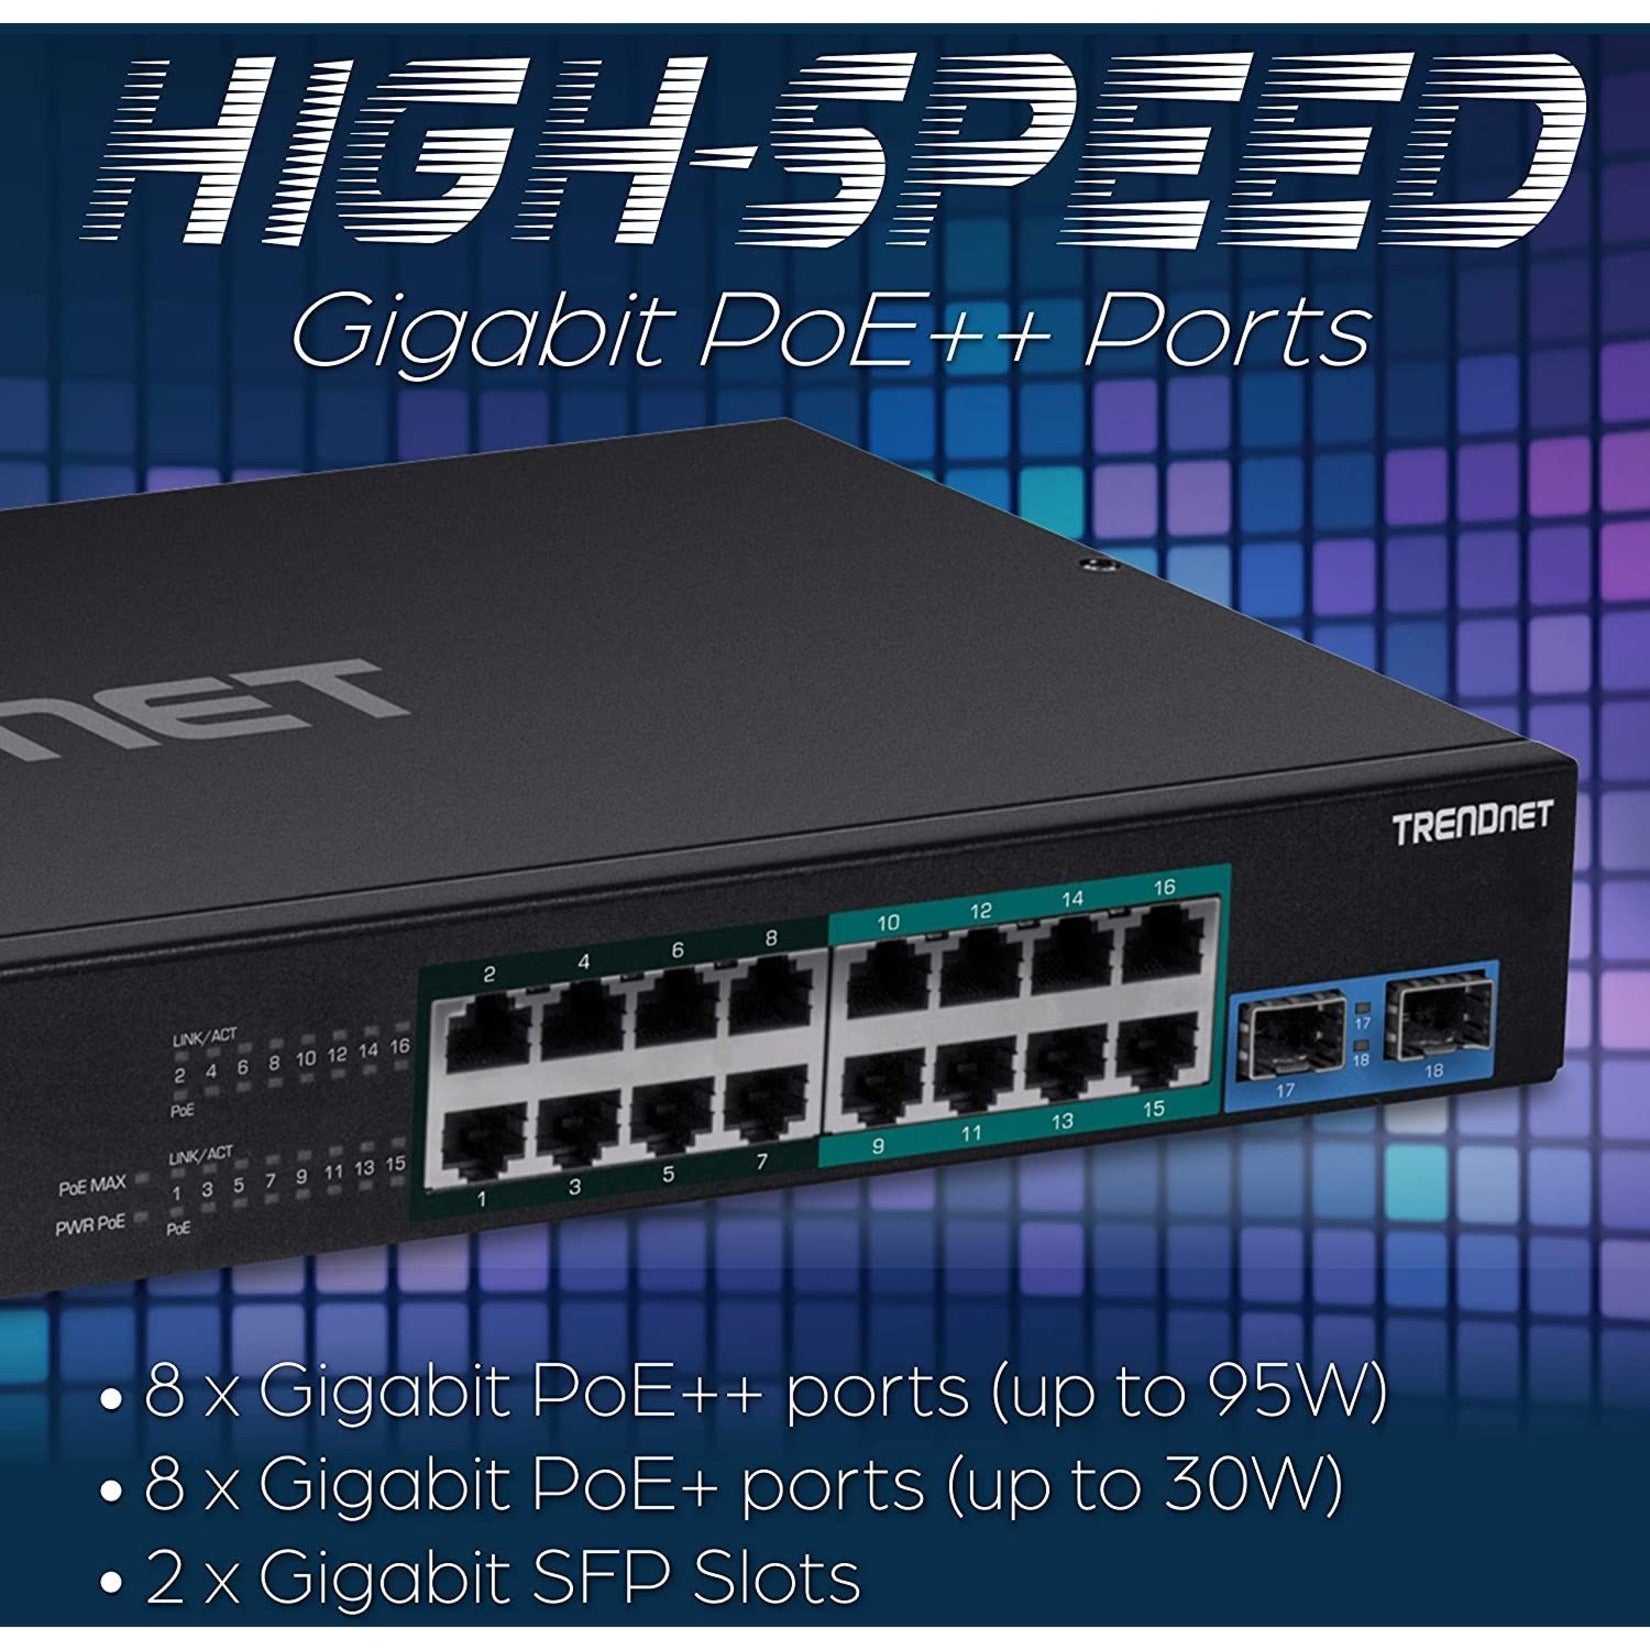 TRENDnet TPE-BG182G 18-Port Gigabit PoE++ Switch, 470W Power Budget, 1U 19" Rack Mountable